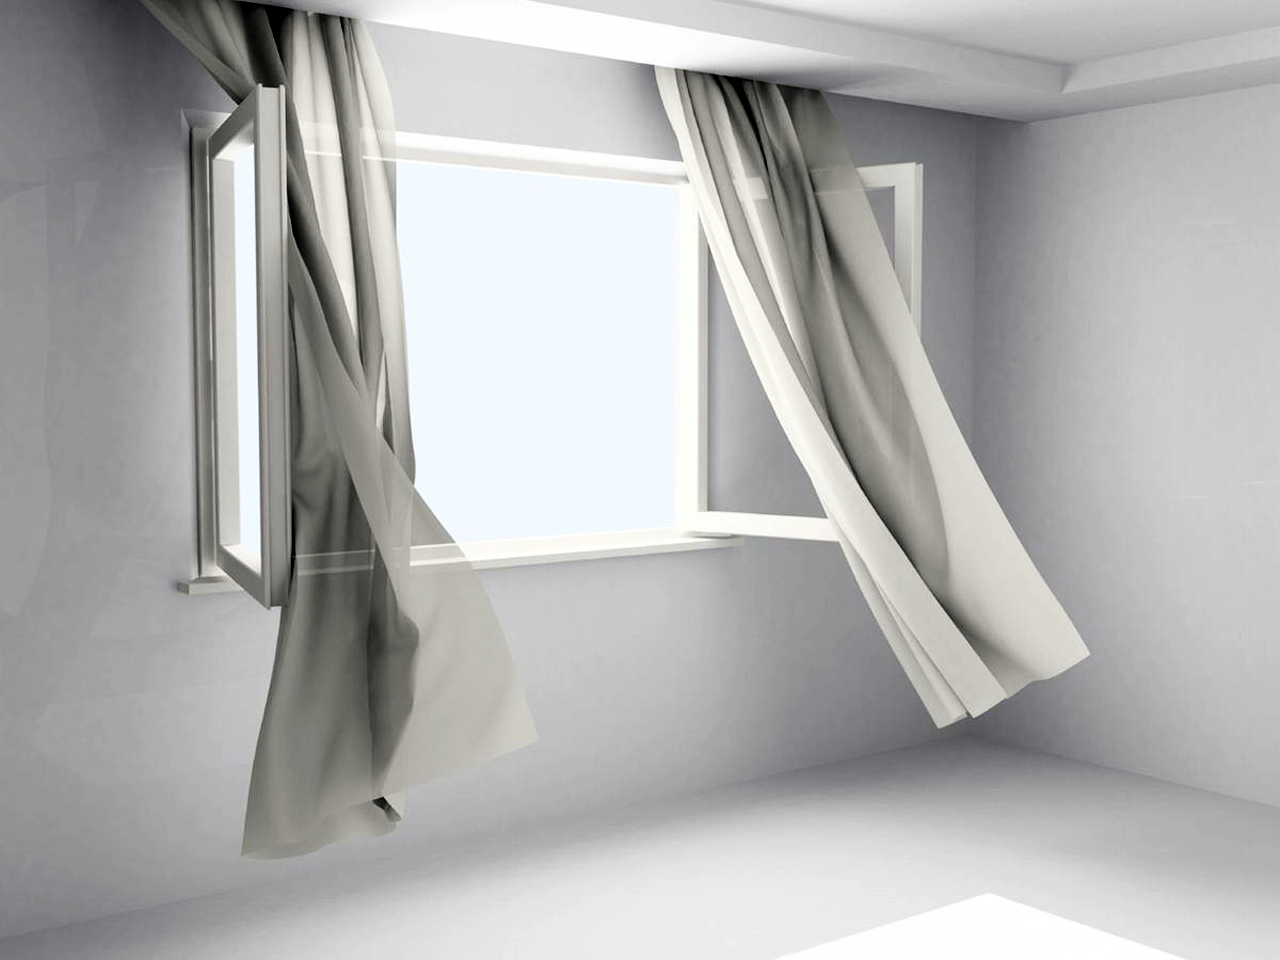 General 1280x960 wind curtains window